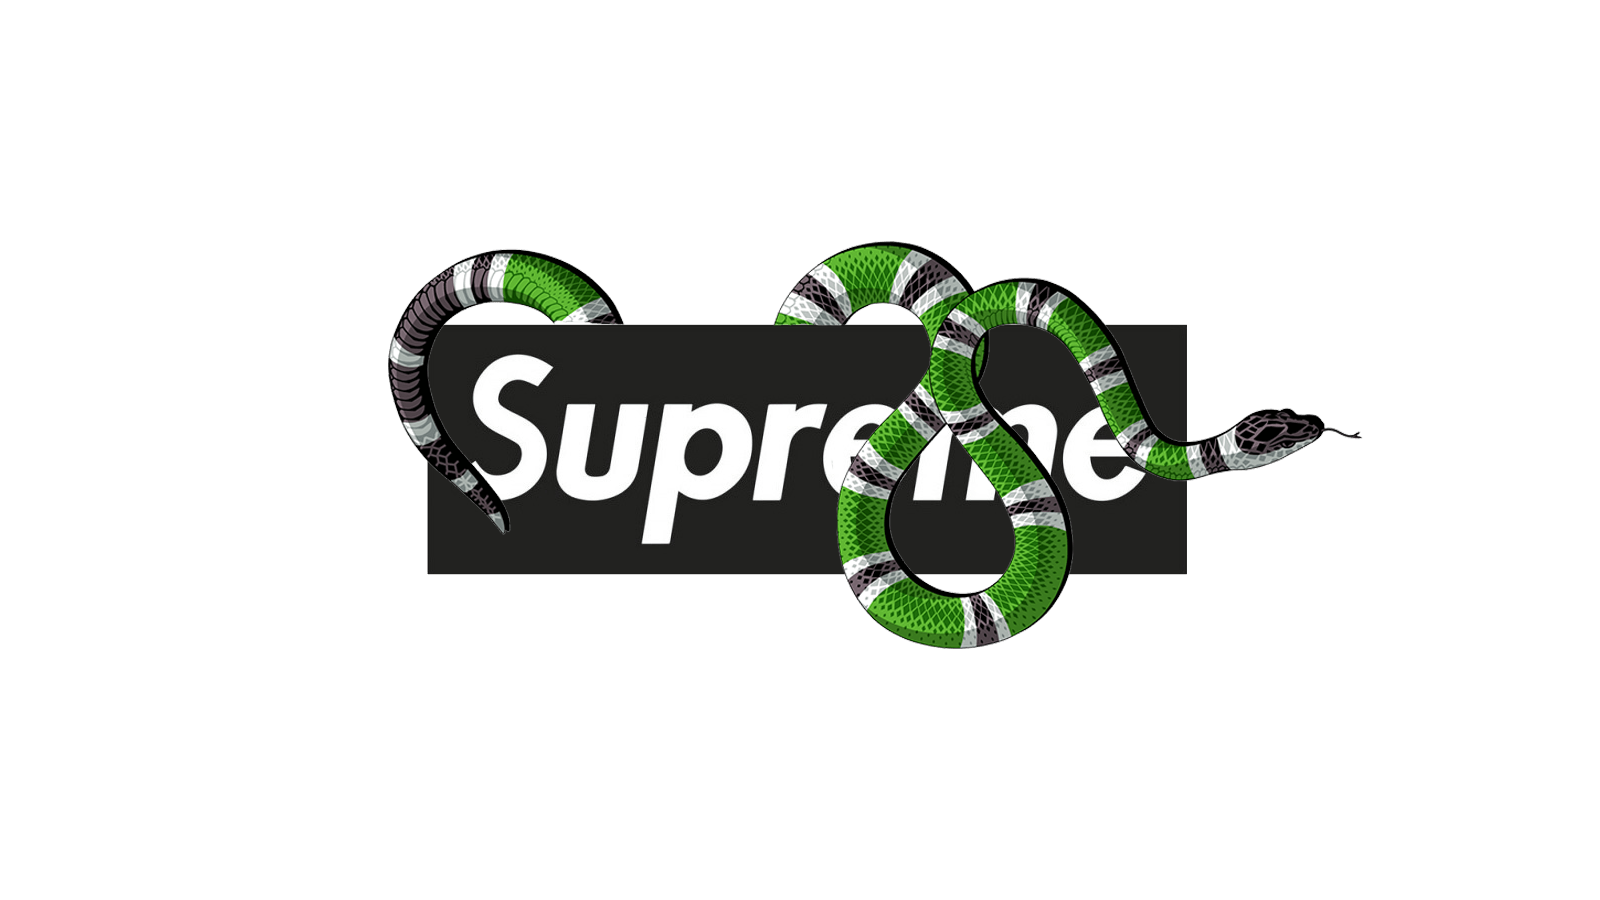 Supreme Snake Logo - Supreme And Gucci Wallpapers - Wallpaper Cave